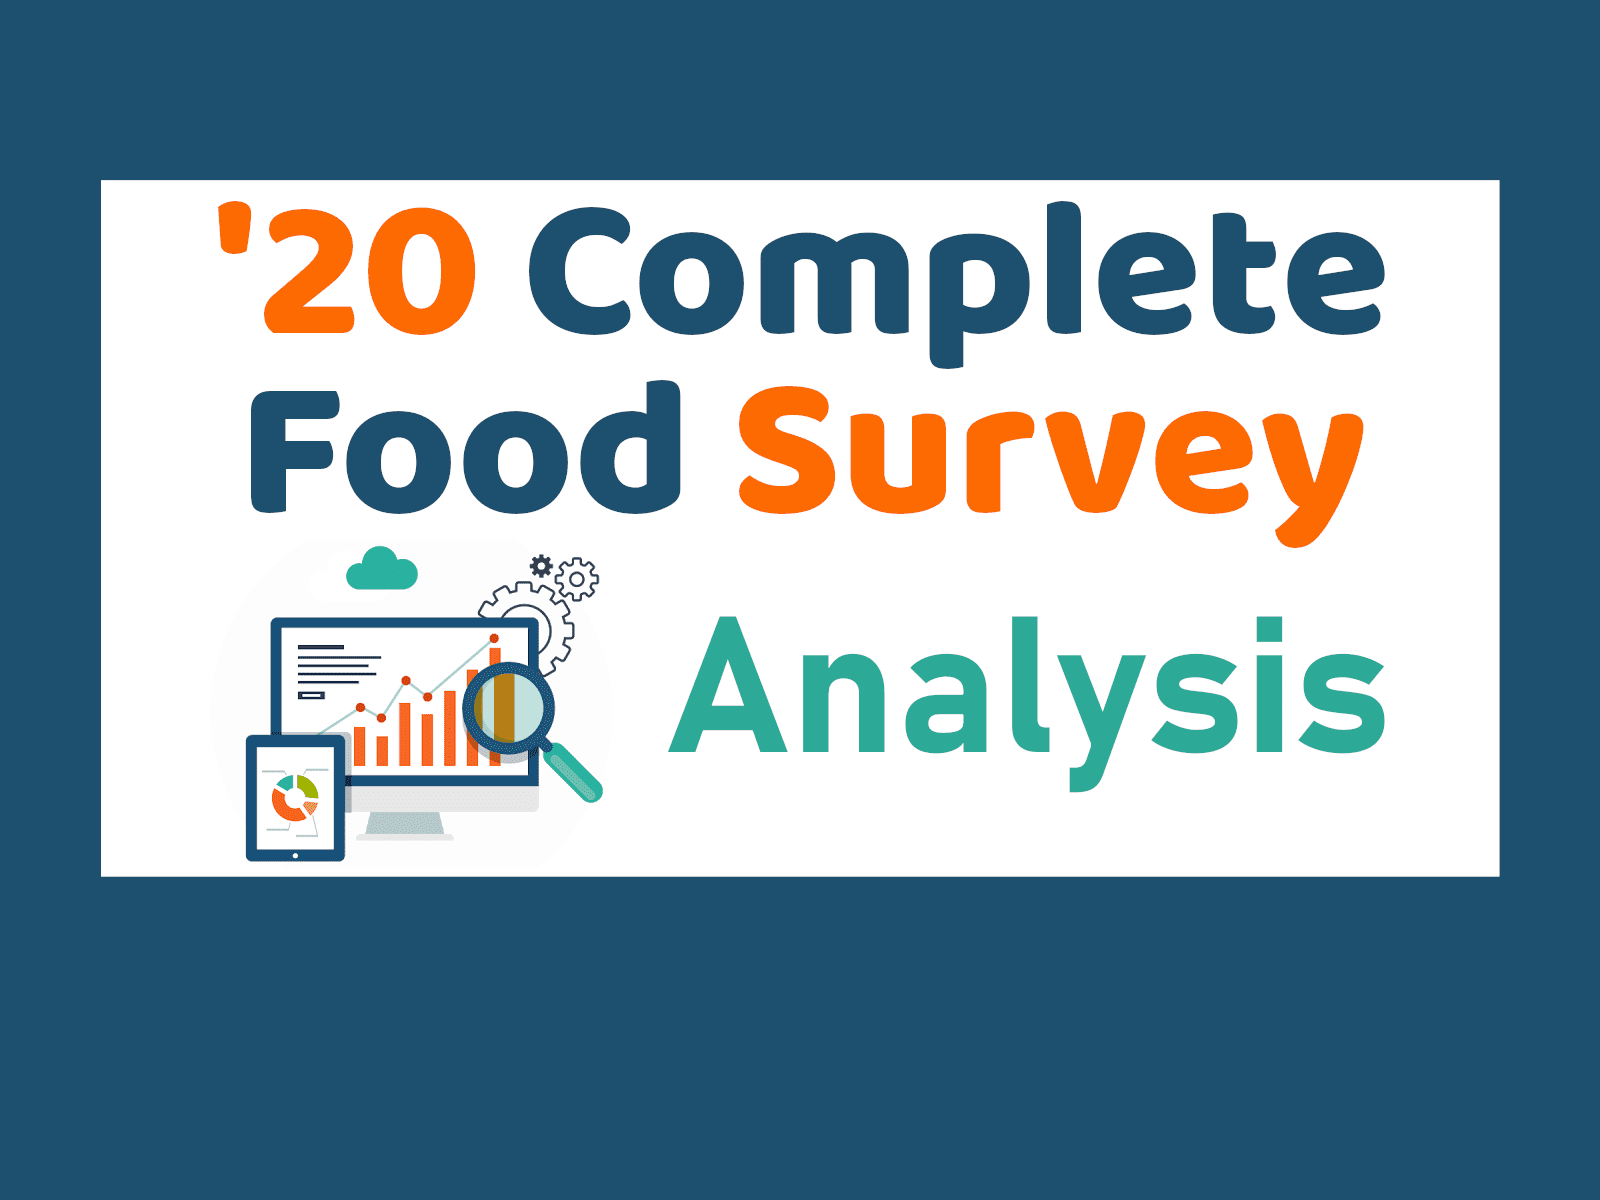 Complete Food Survey 2020 analysis